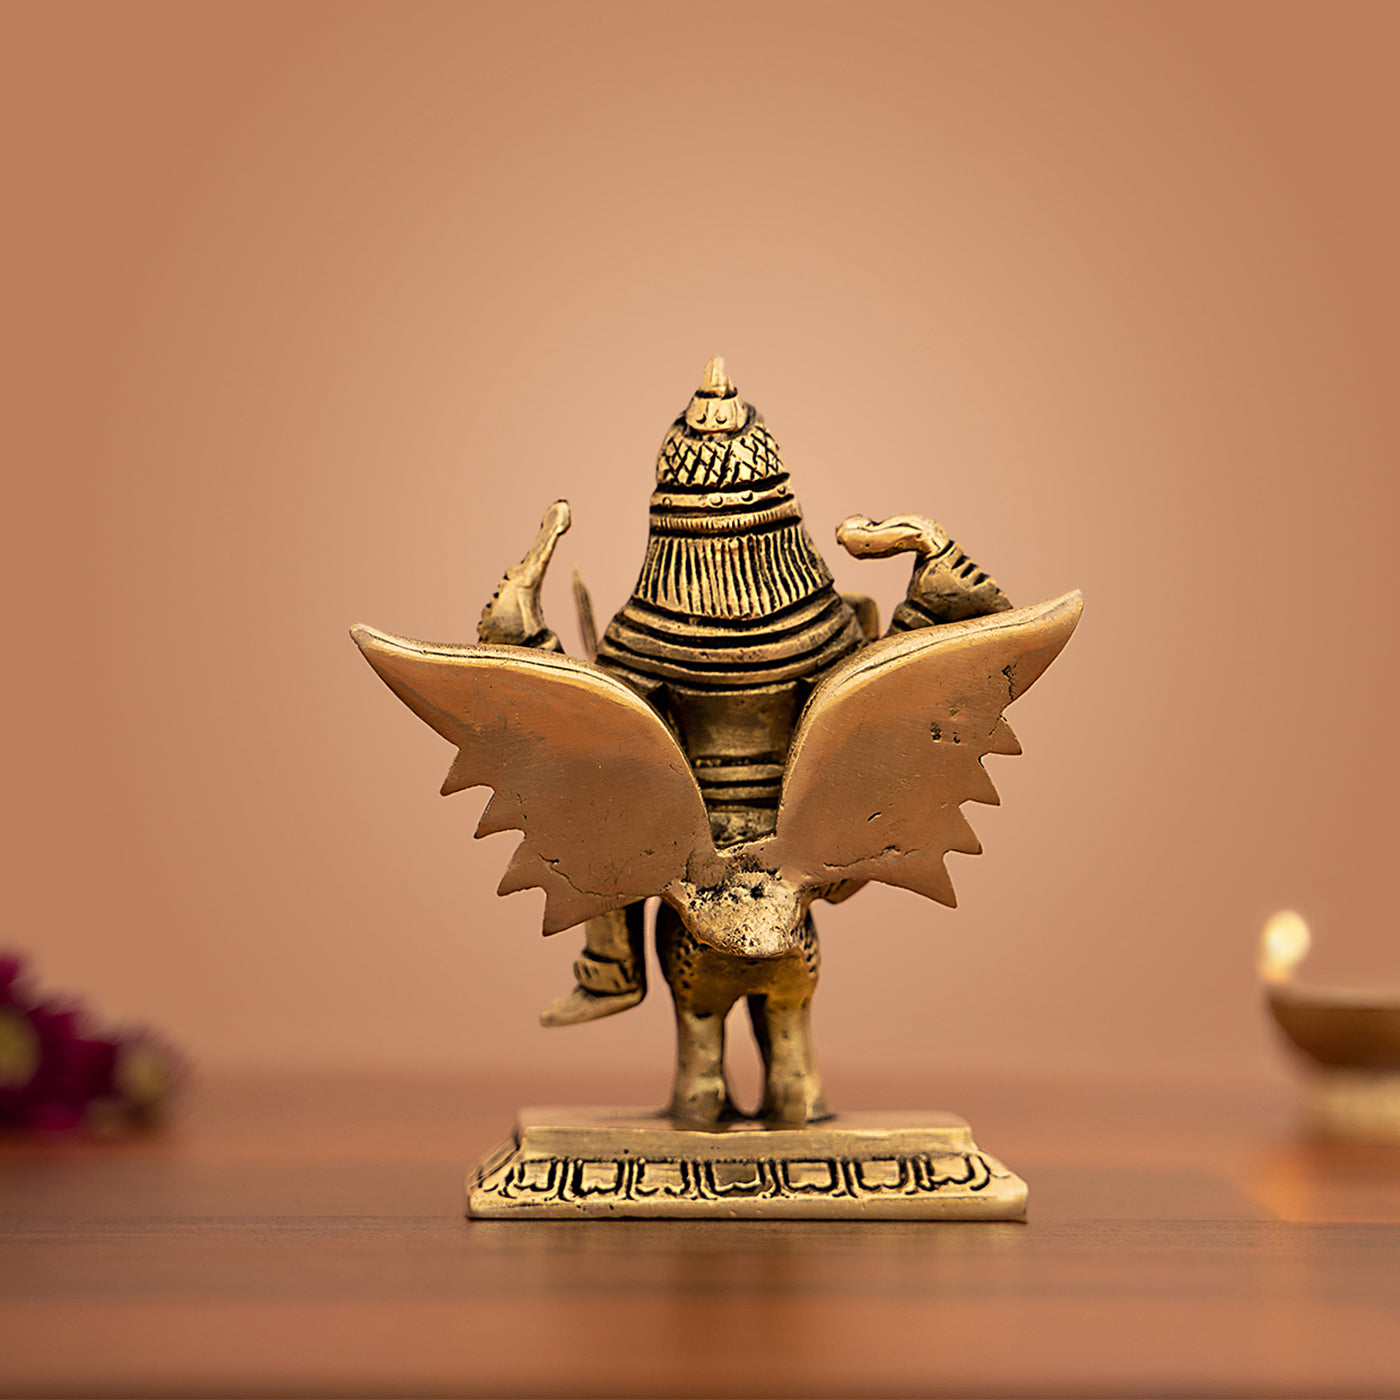 Brass Handcrafted Shani Dev Idol/Statue